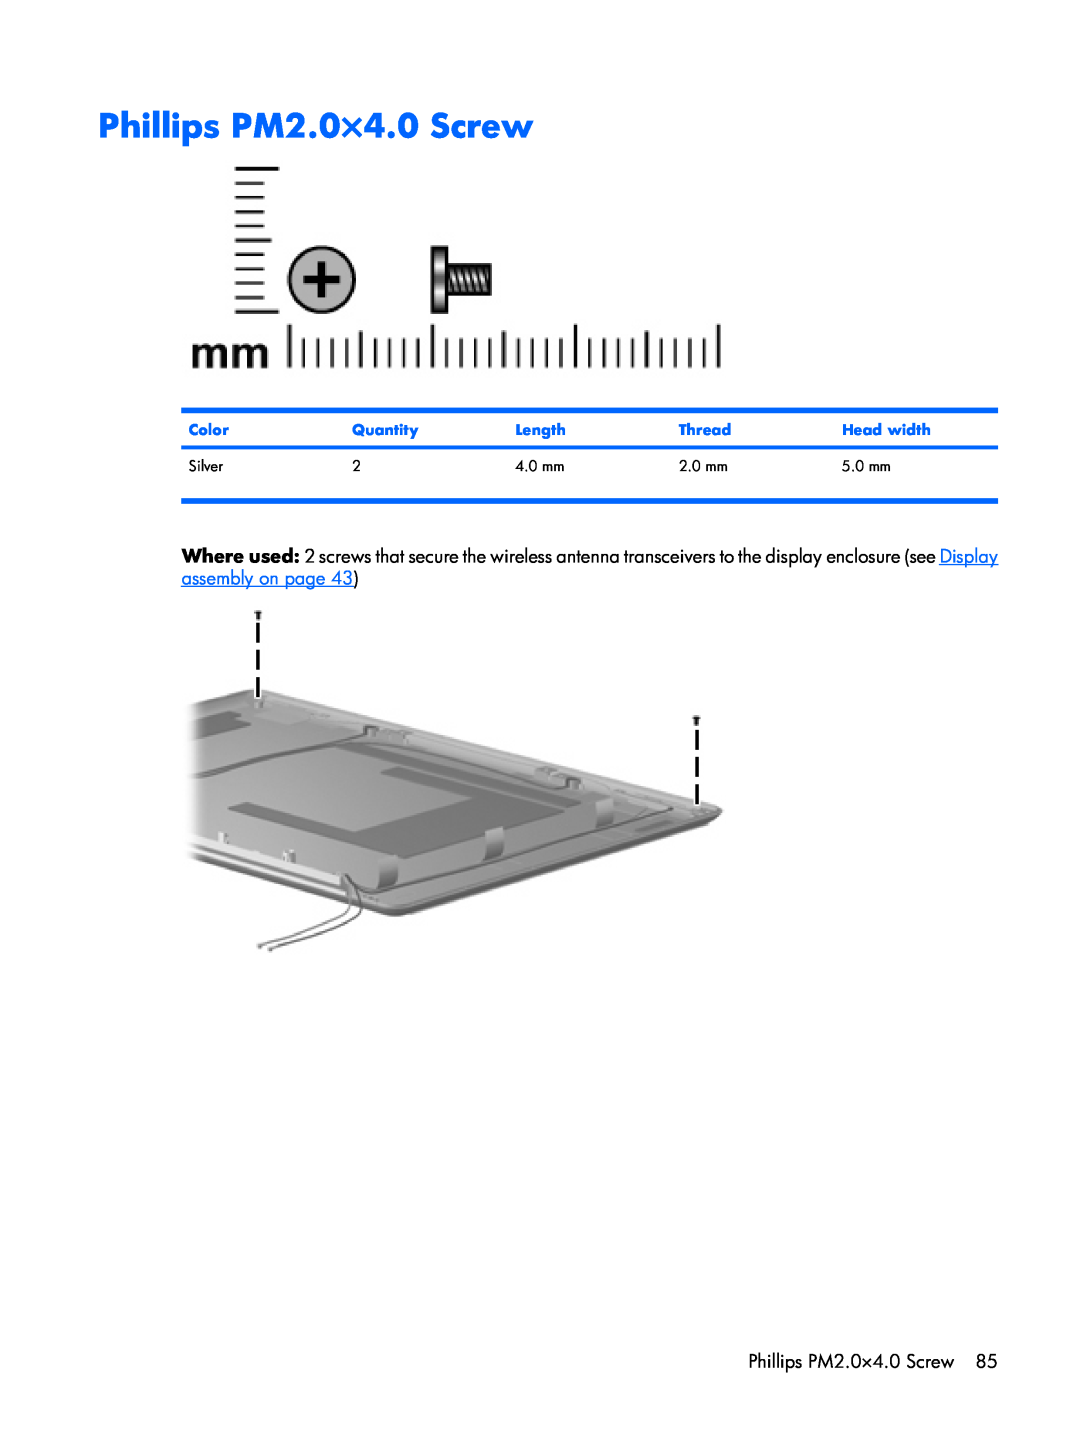 Compaq F500 manual Phillips PM2.0×4.0 Screw, Color, Quantity, Length, Thread, Head width, Silver, 4.0 mm, 2.0 mm, 5.0 mm 